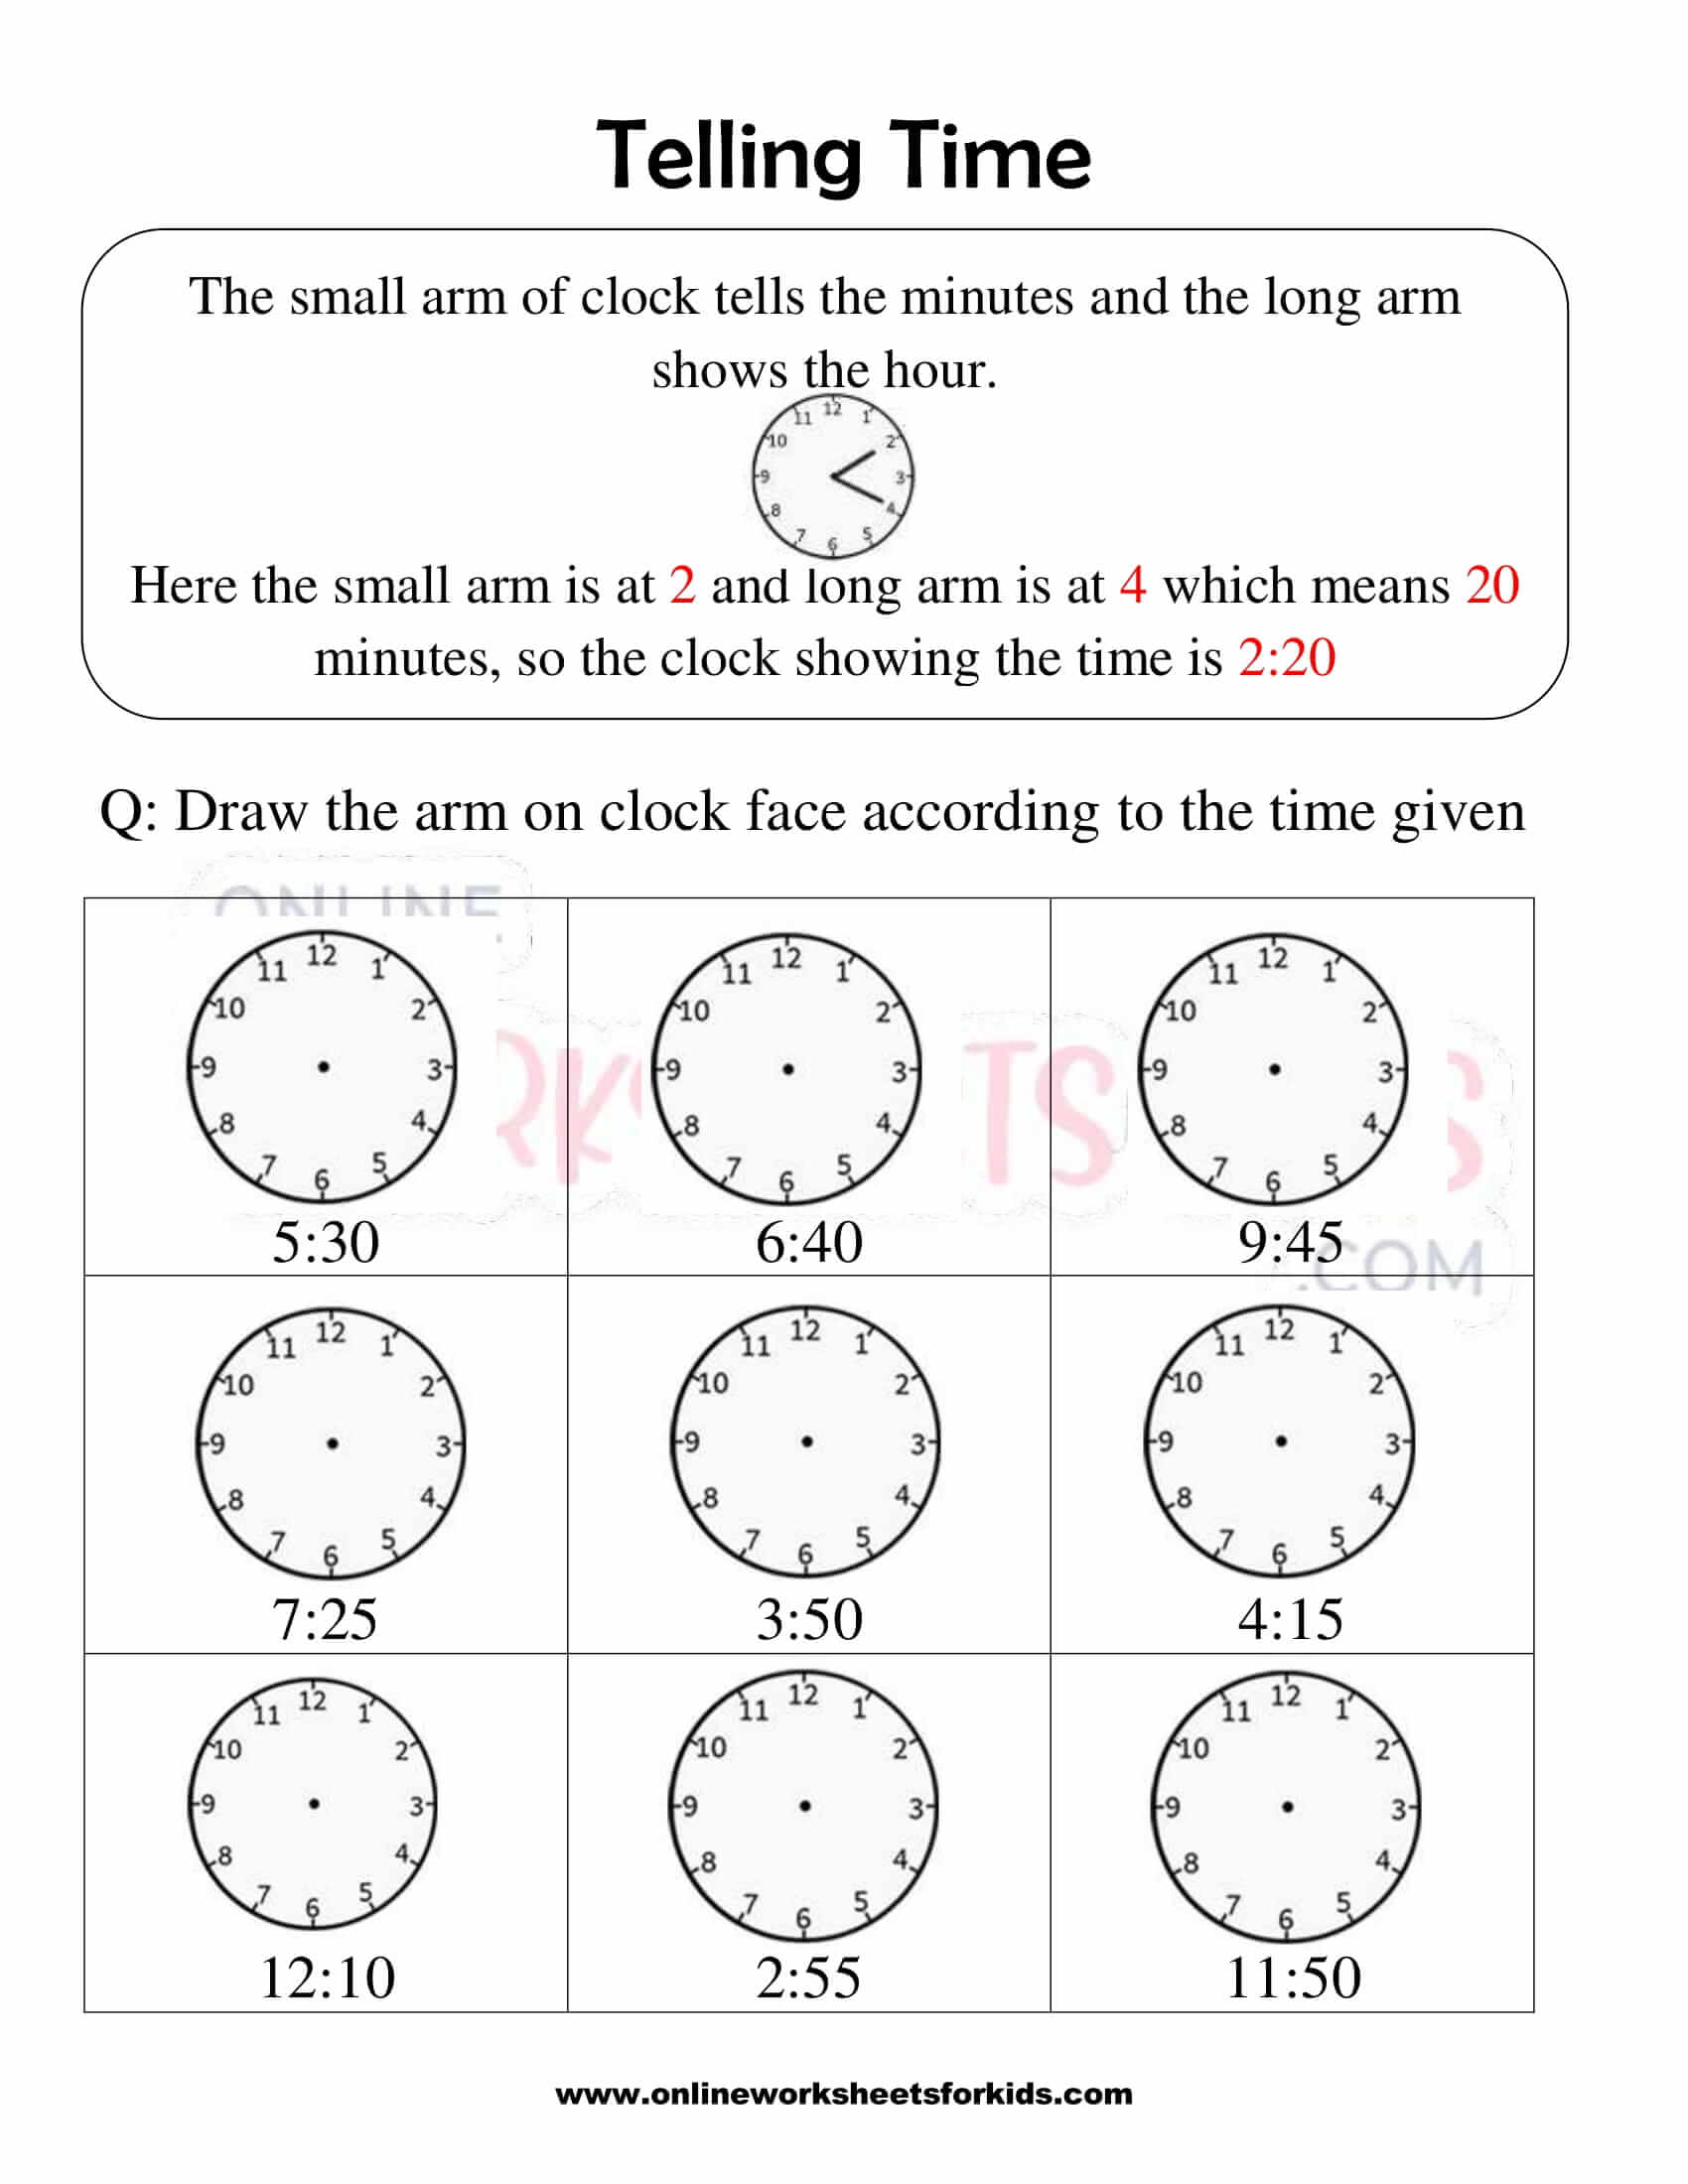 grade-3-telling-time-worksheet-read-the-clock-5-minute-intervals-k5